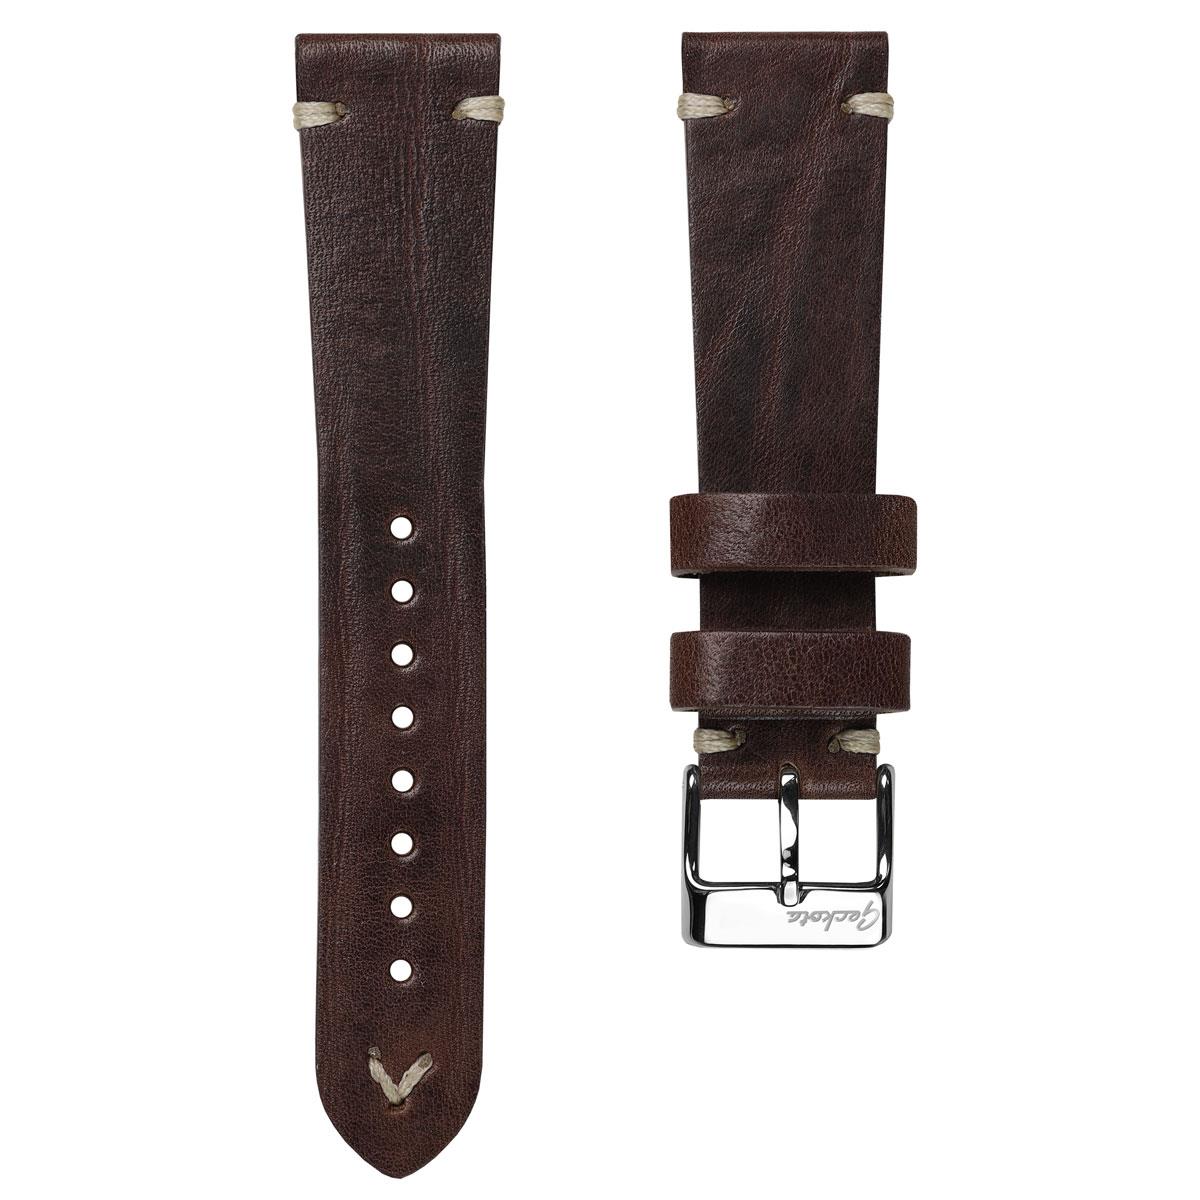 Geckota Vintage V-Stitch Italian Leather Watch Strap - Chocolate Brown